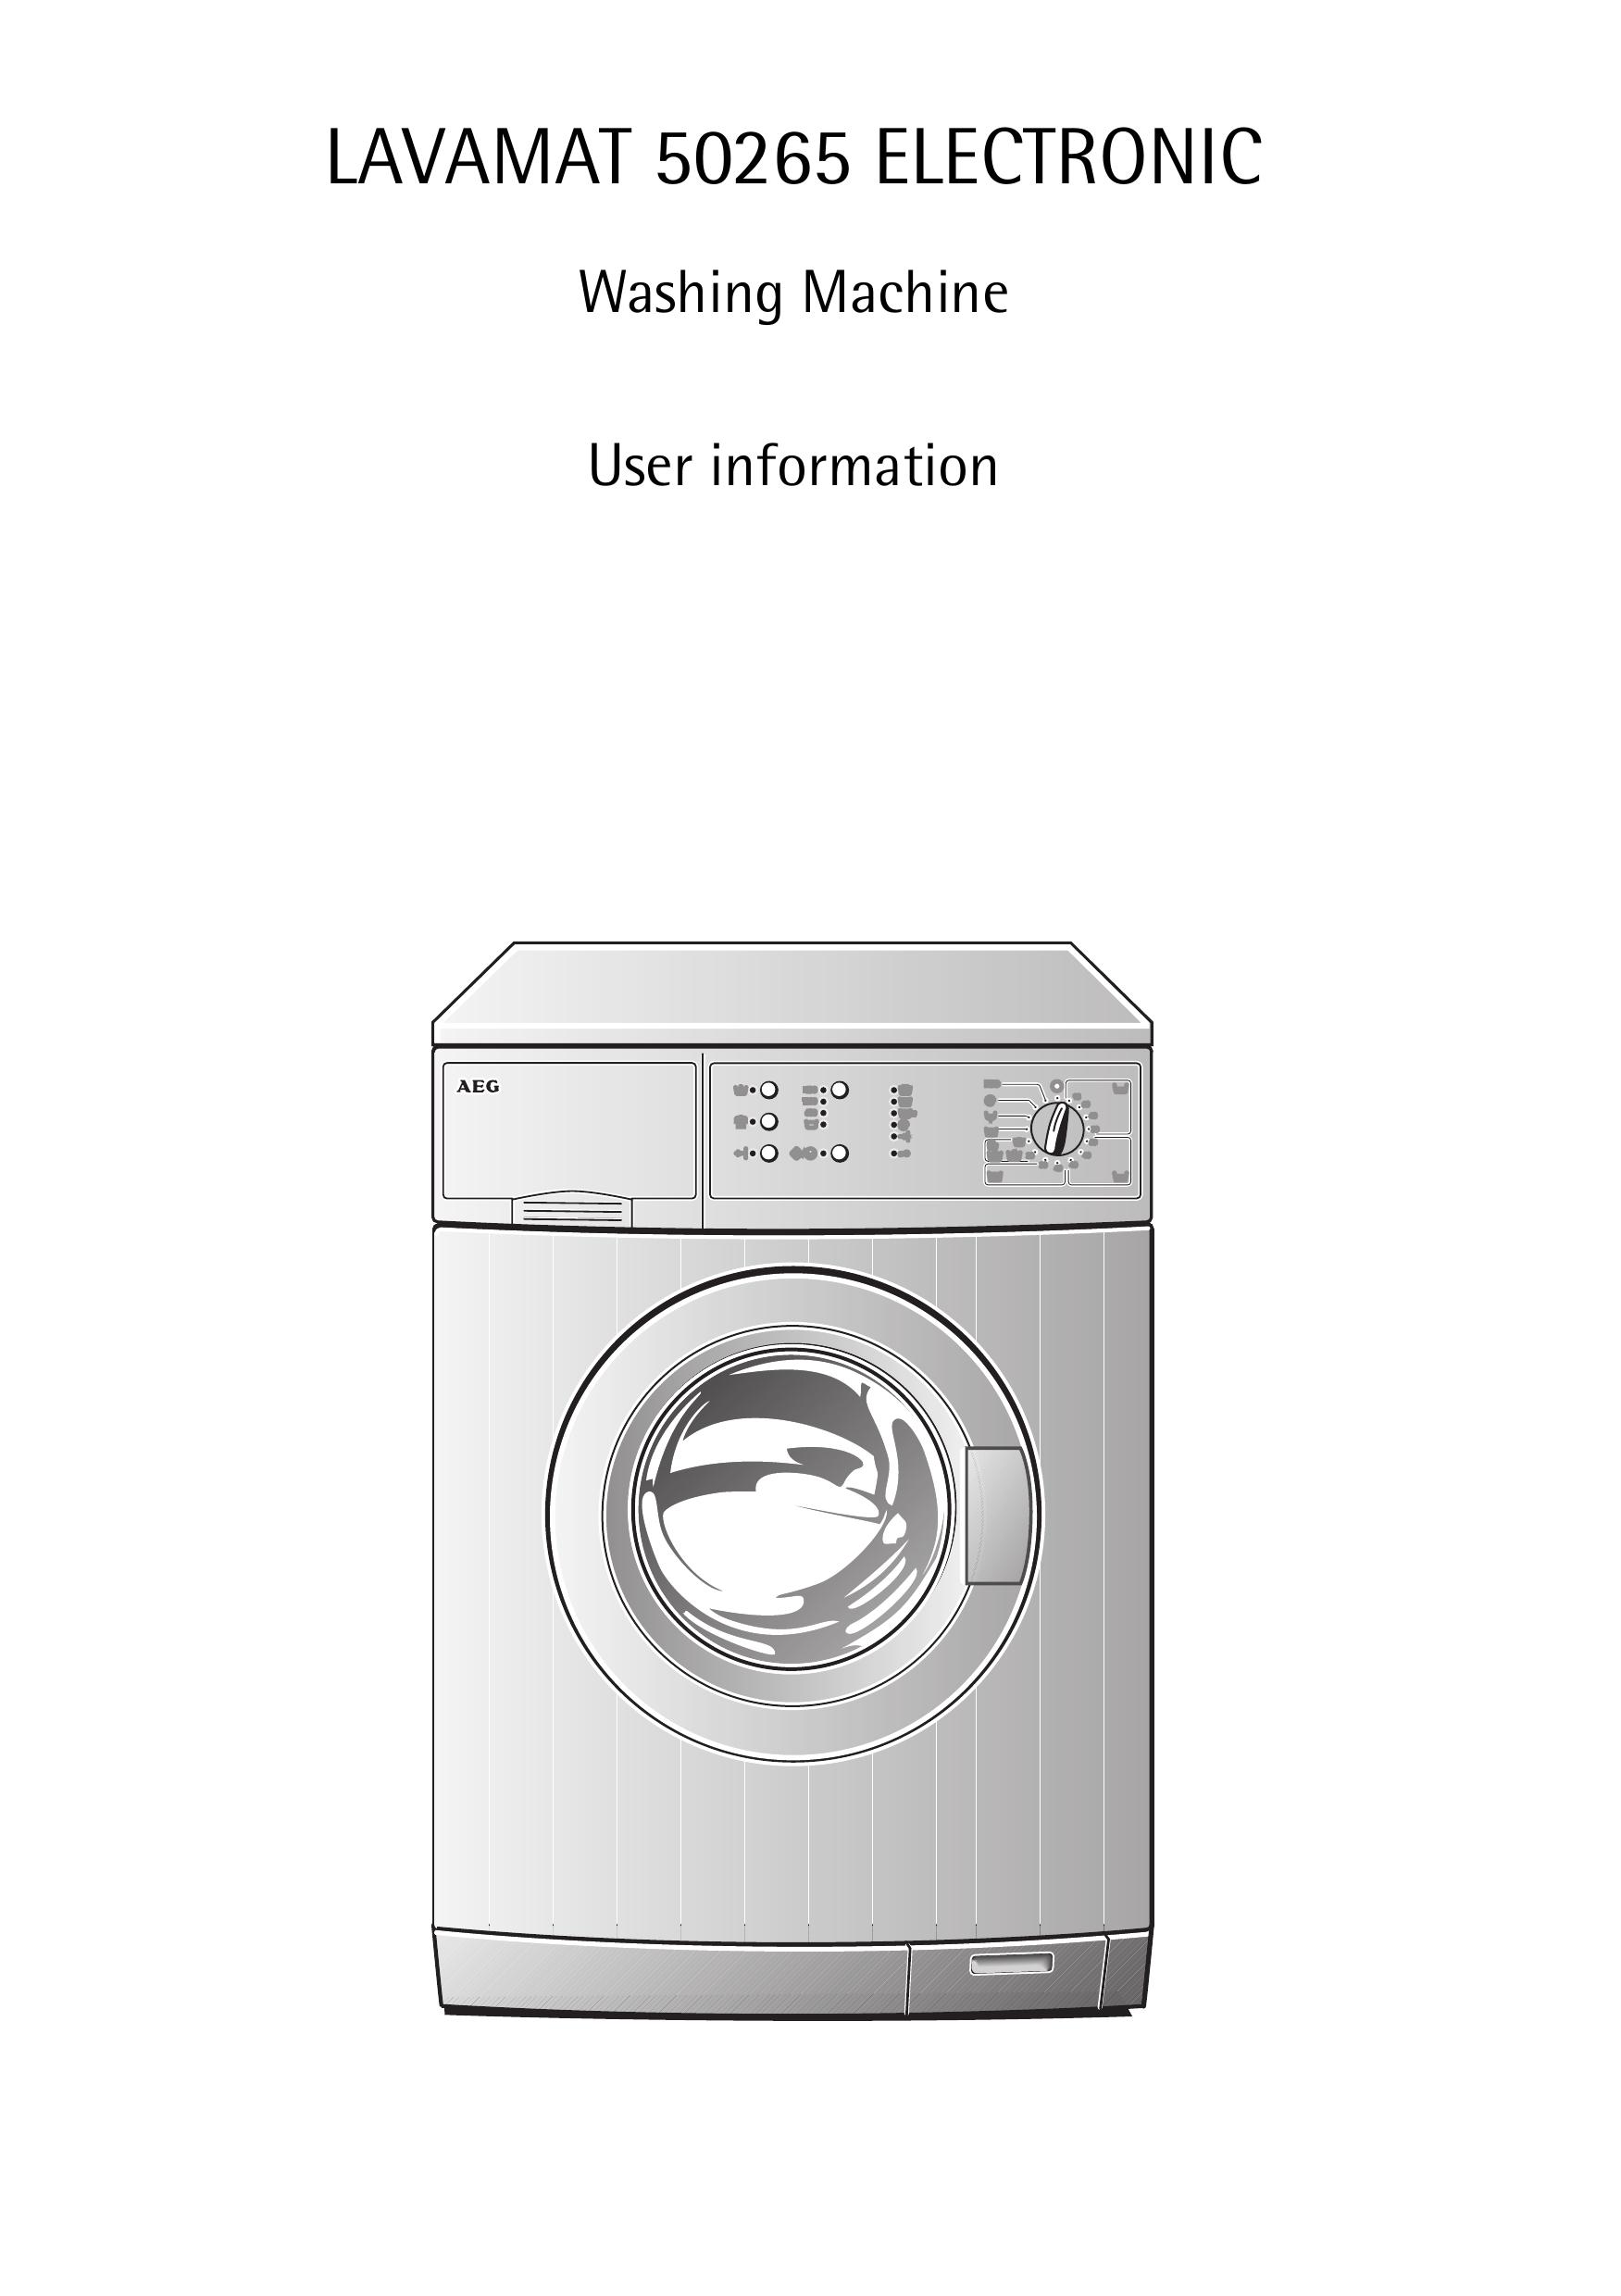 AEG 50265 Washer User Manual